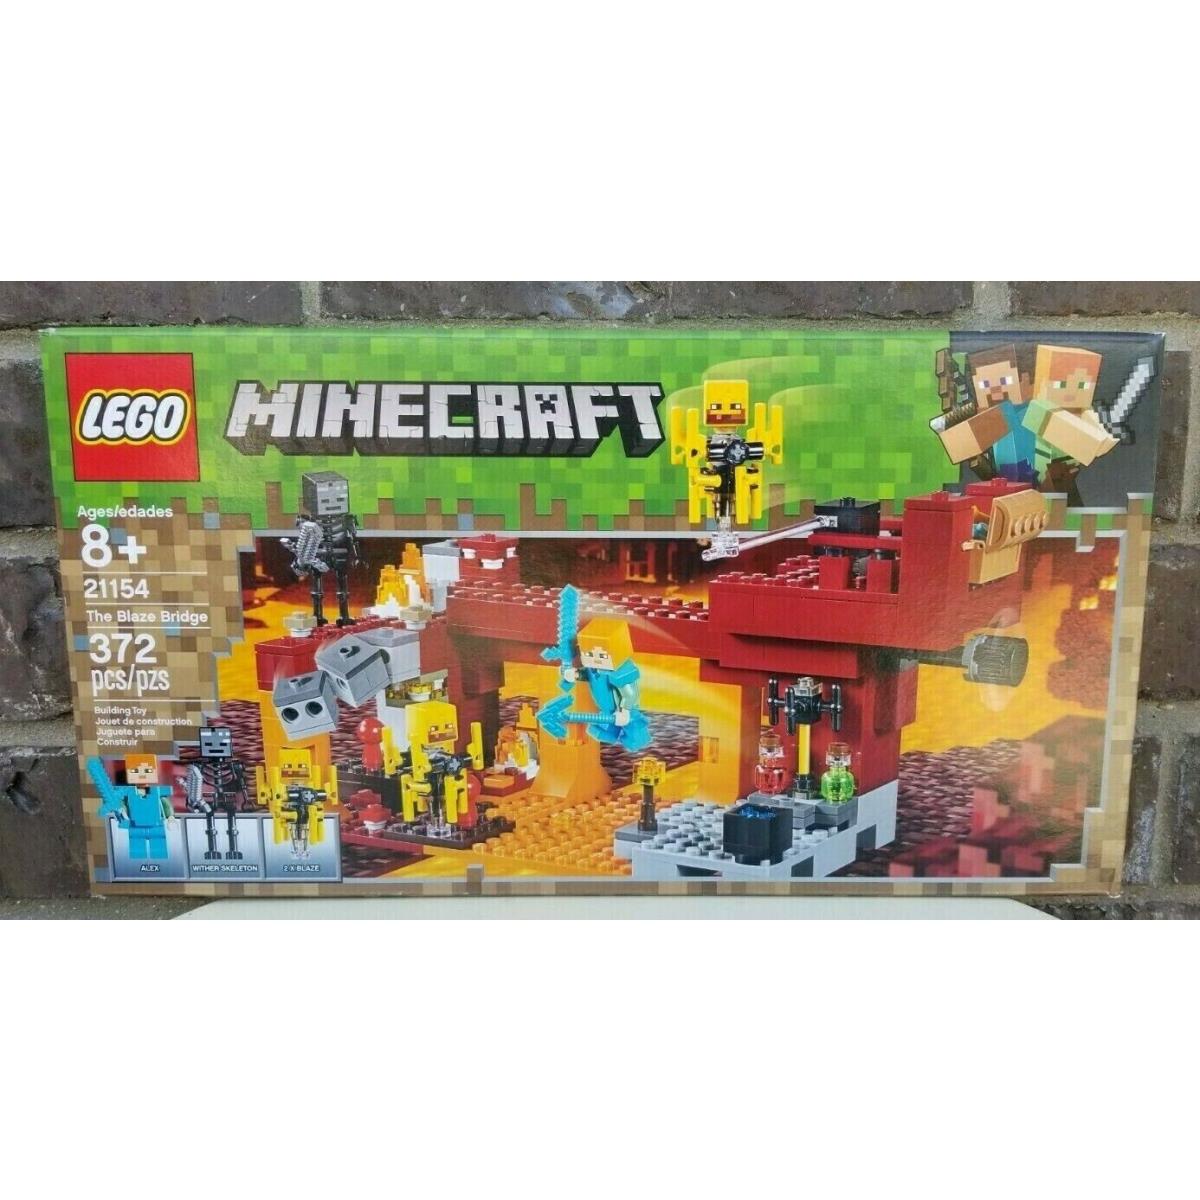 Lego Minecraft 21154 The Blaze Bridge Building Set 372 Pieces